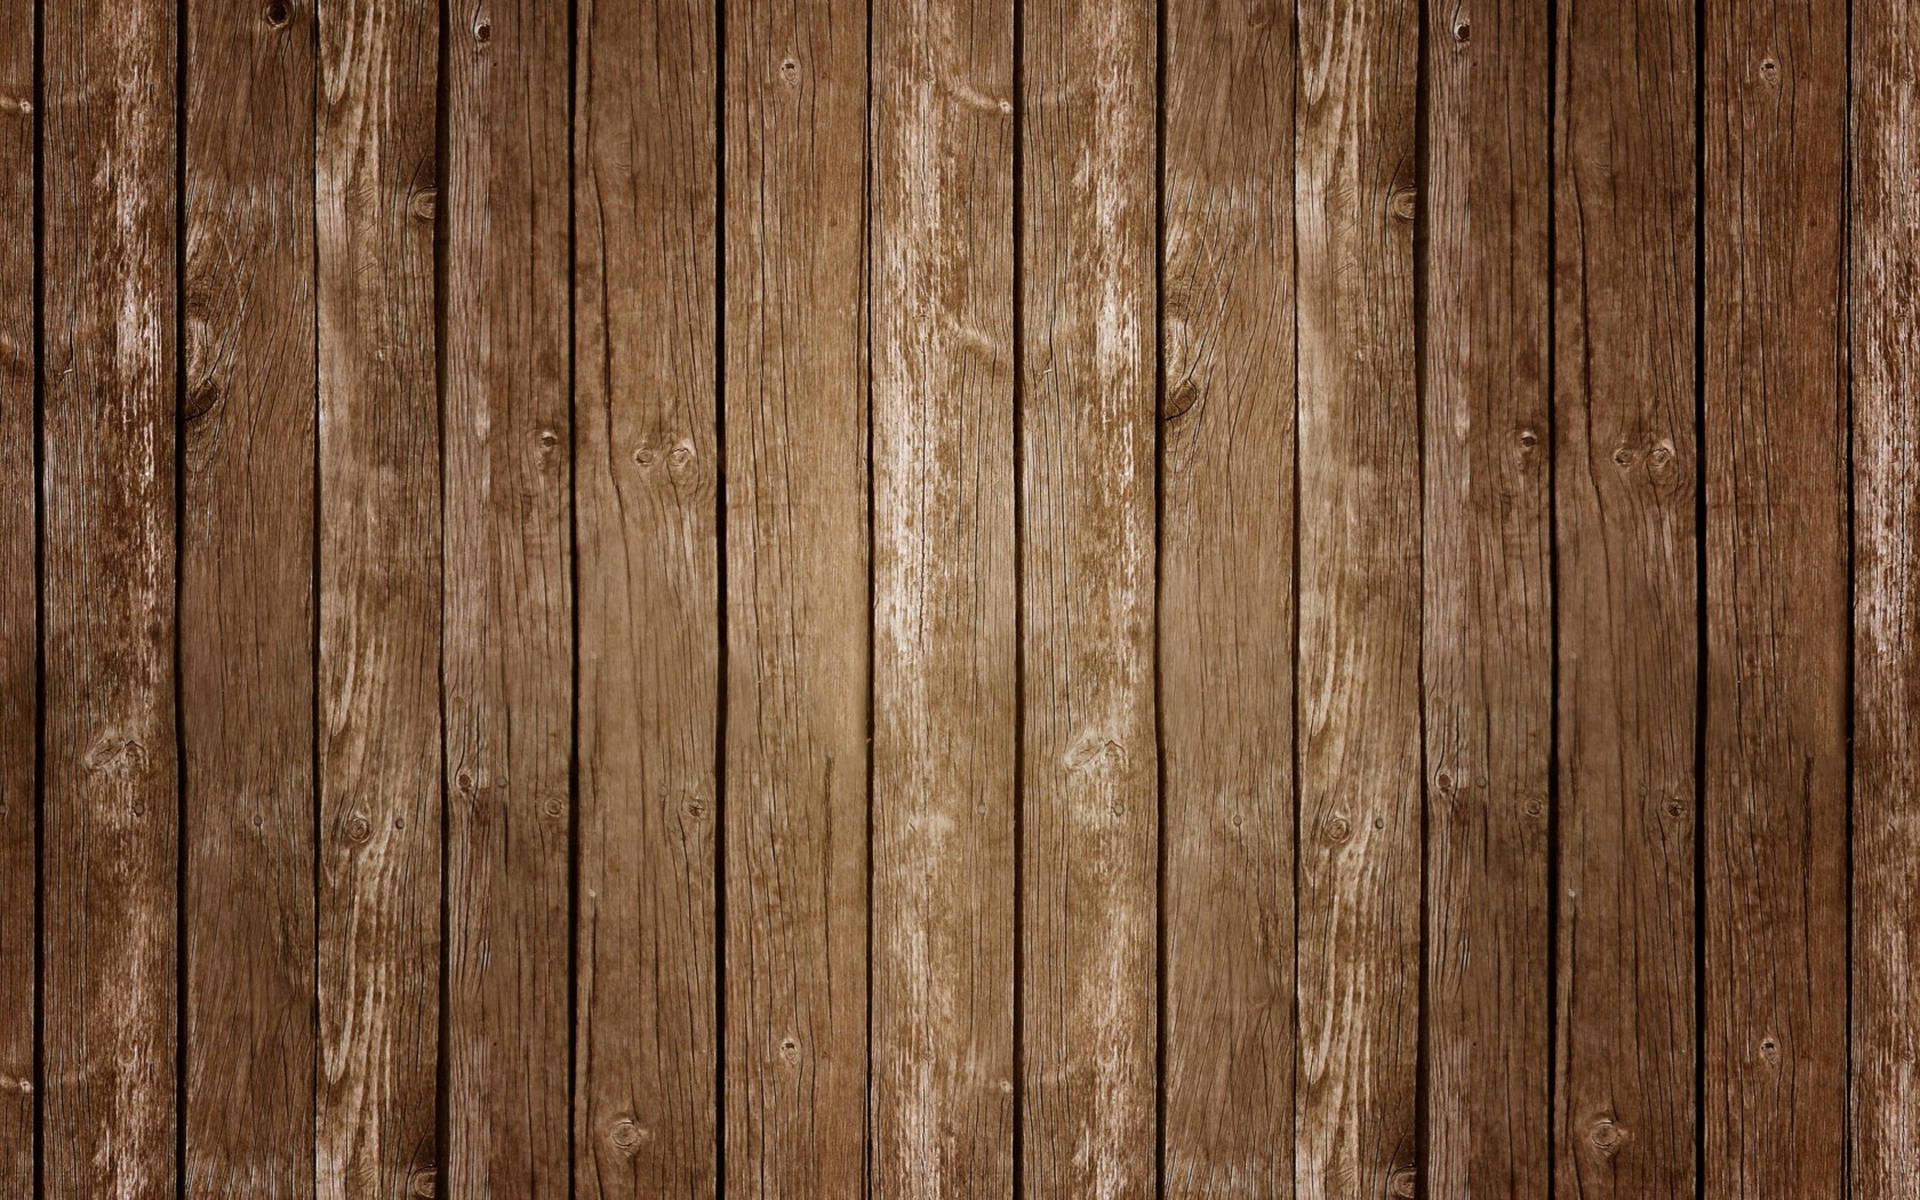  Planke Hintergrundbild 1920x1200. Free Wood Wallpaper Downloads, Wood Wallpaper for FREE